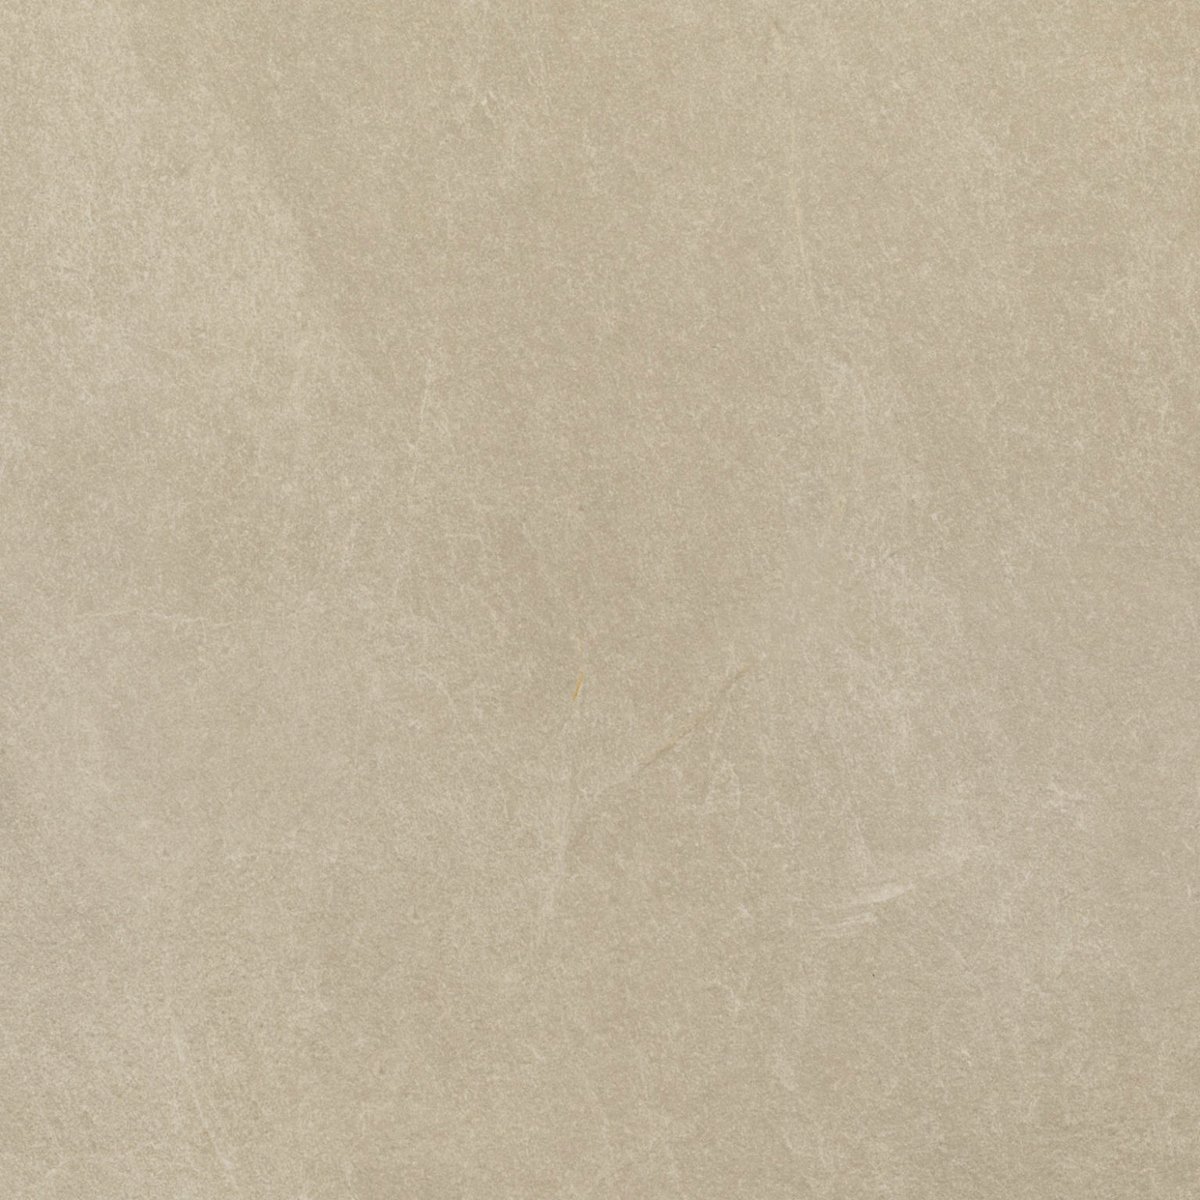 LAKESTONE - Carrelage Sol Effet pierre - Sand - 60×60 - Réf.222103